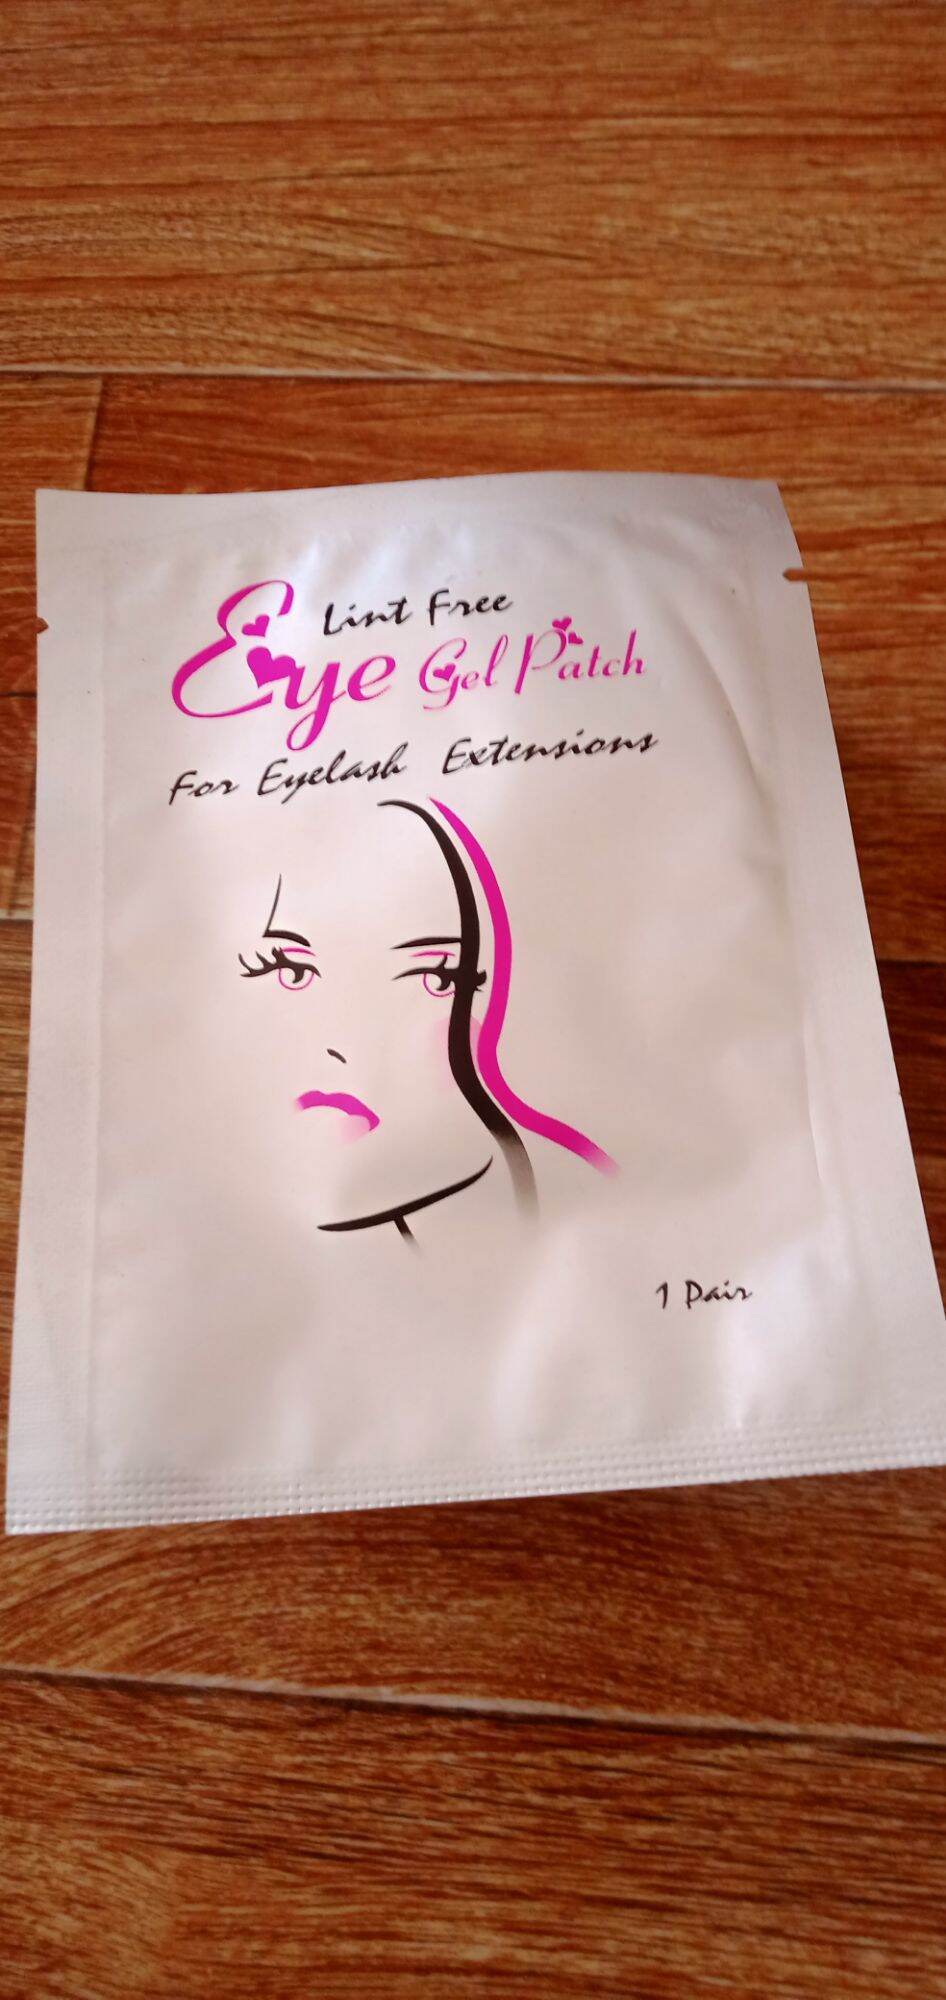 Eye gel patch